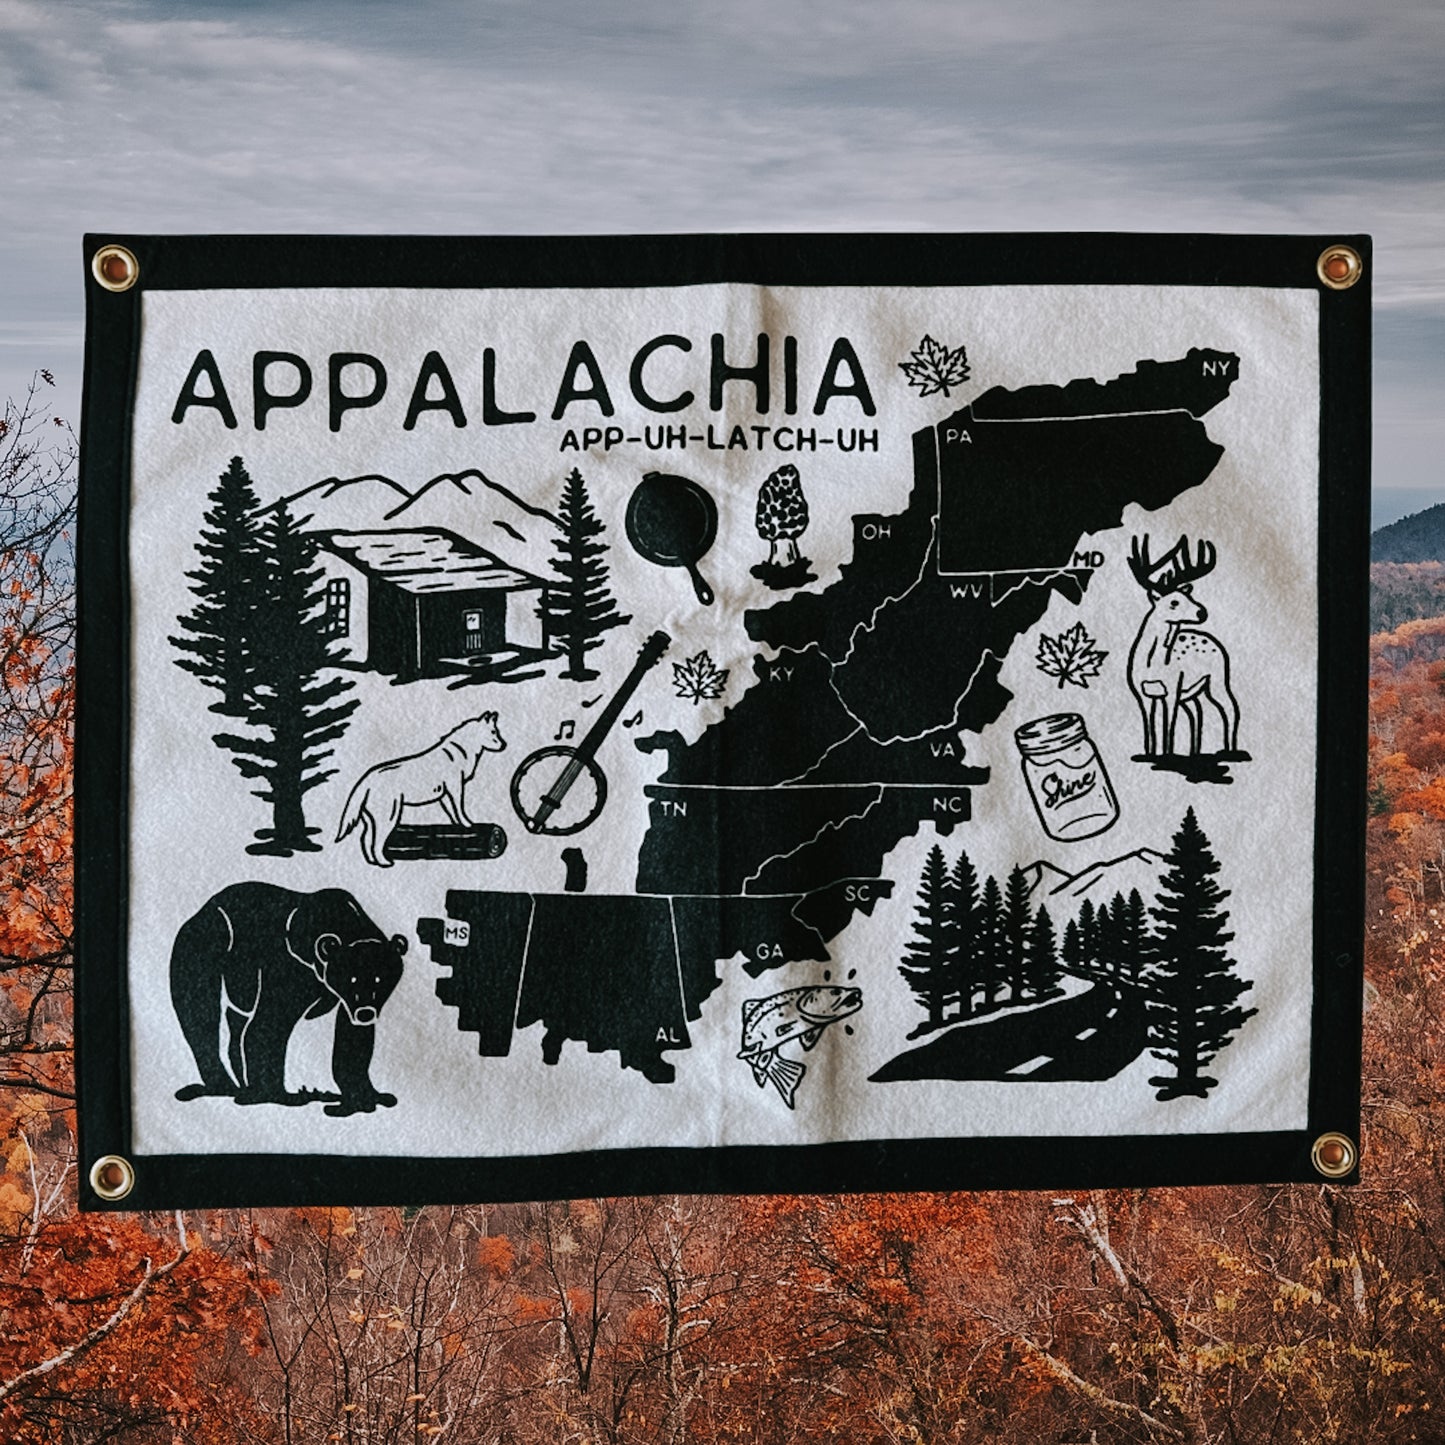 Appalachia // Camp flag